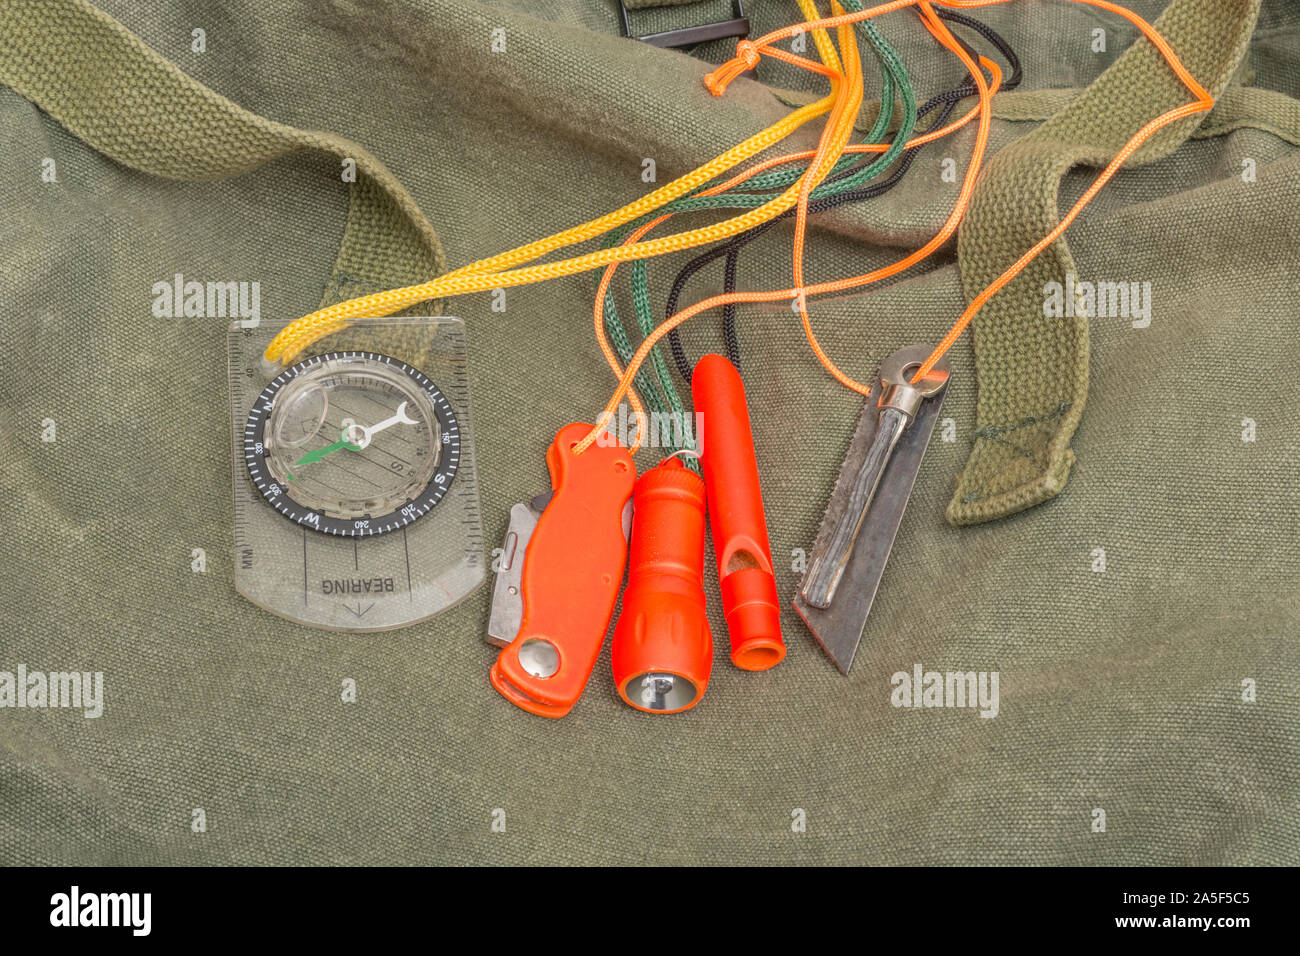 Survival skills & gear. High vis survival firelighter, survival whistle, high viz survival torch, high viz knife, survival compass, emergency kit. Stock Photo